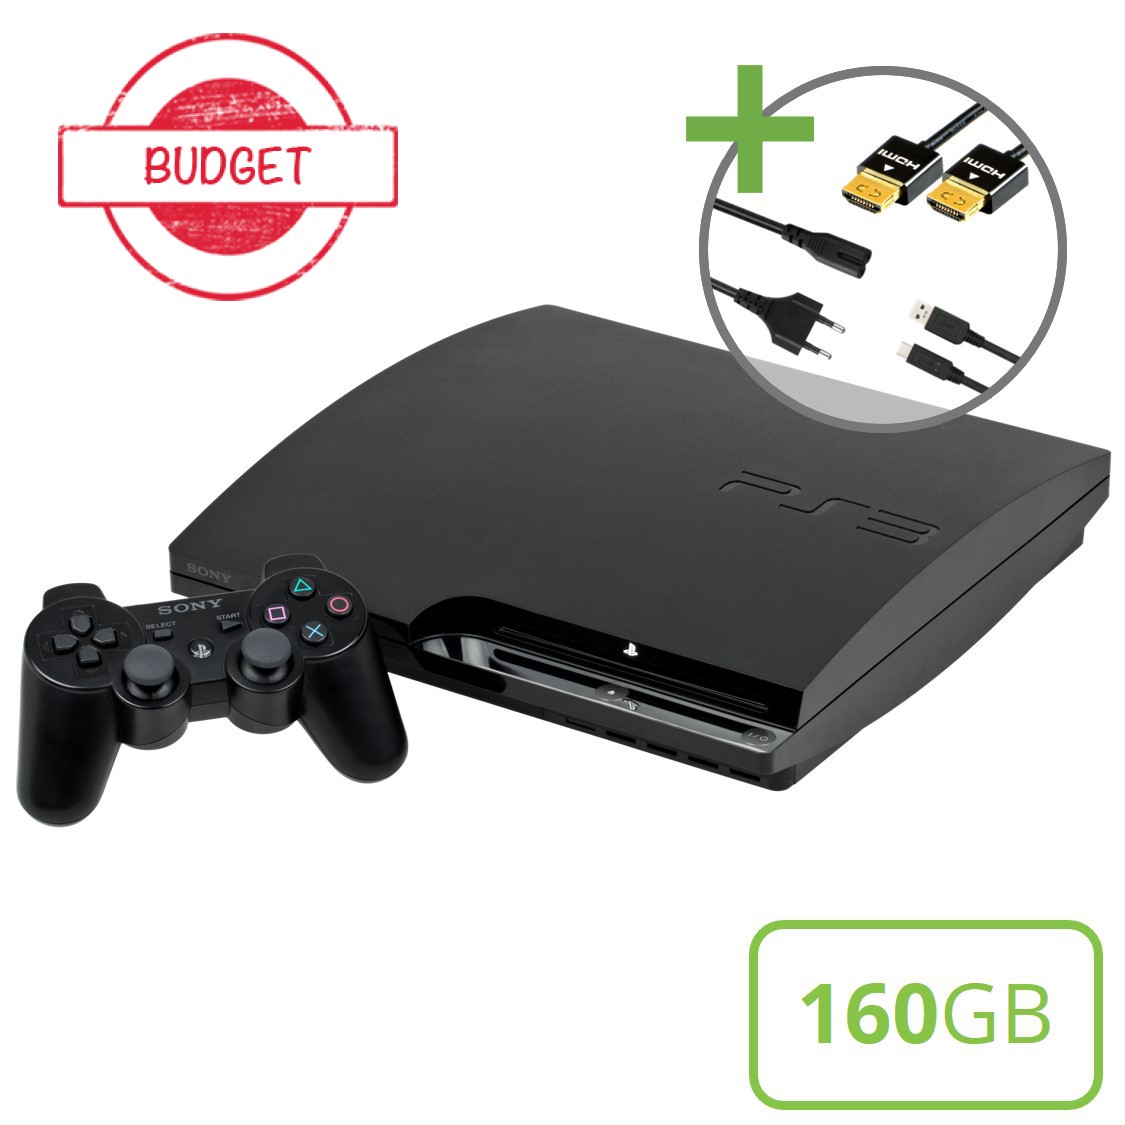 Sony PlayStation 3 Slim (160GB) Starter Pack - DualShock Edition - Budget Kopen | Playstation 3 Hardware